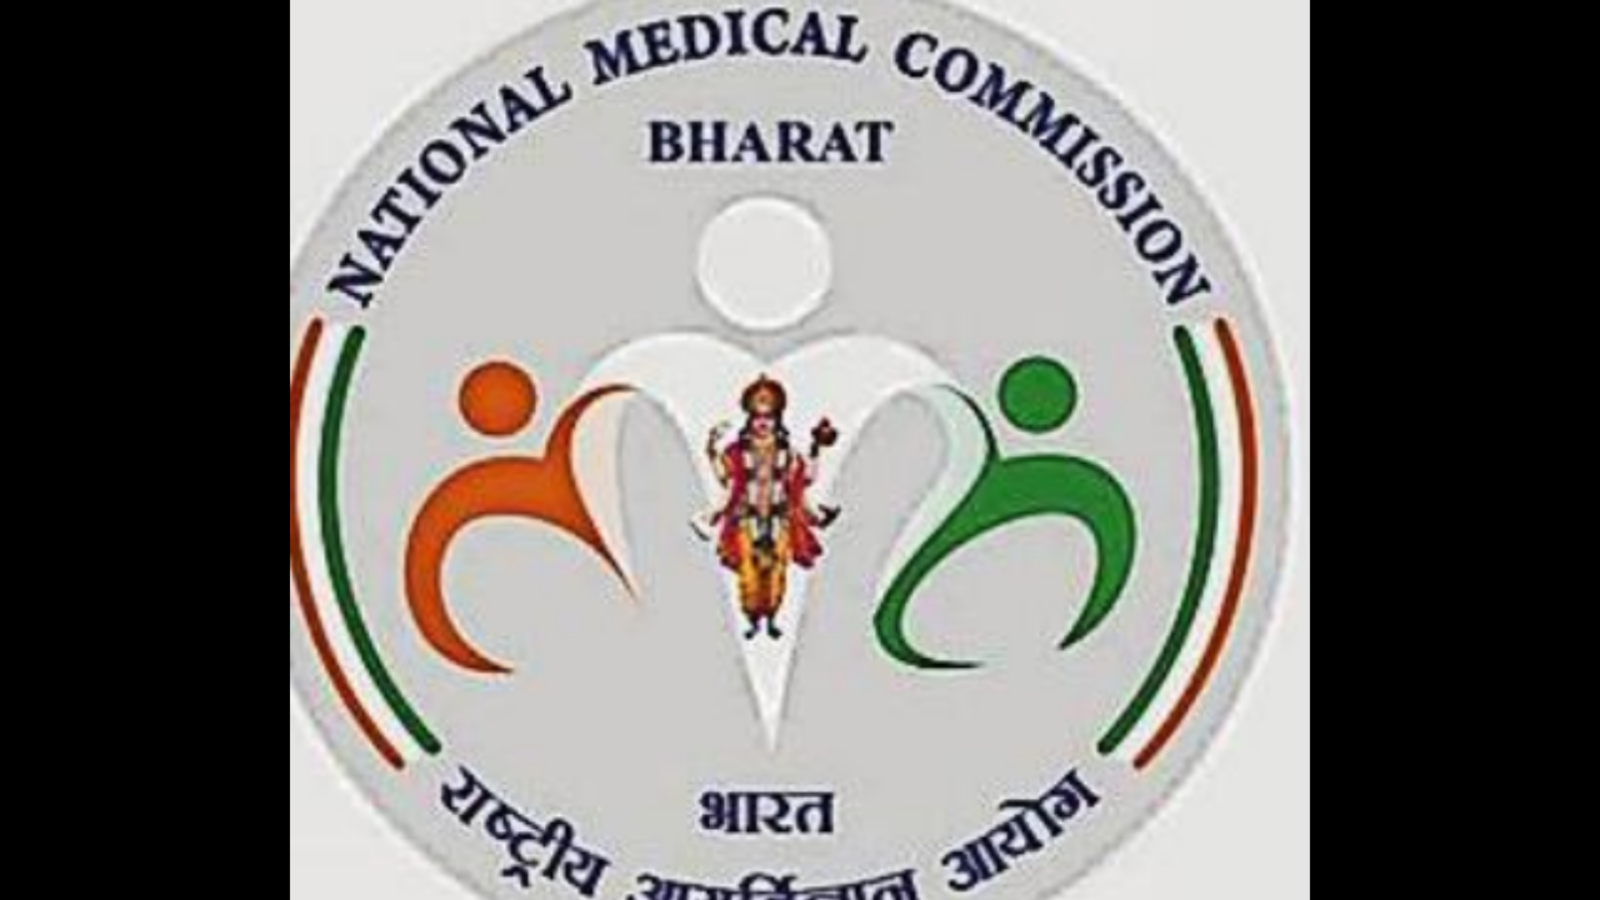 NMC logo changed: Ayurveda god image added; Medical fraternity not pleased